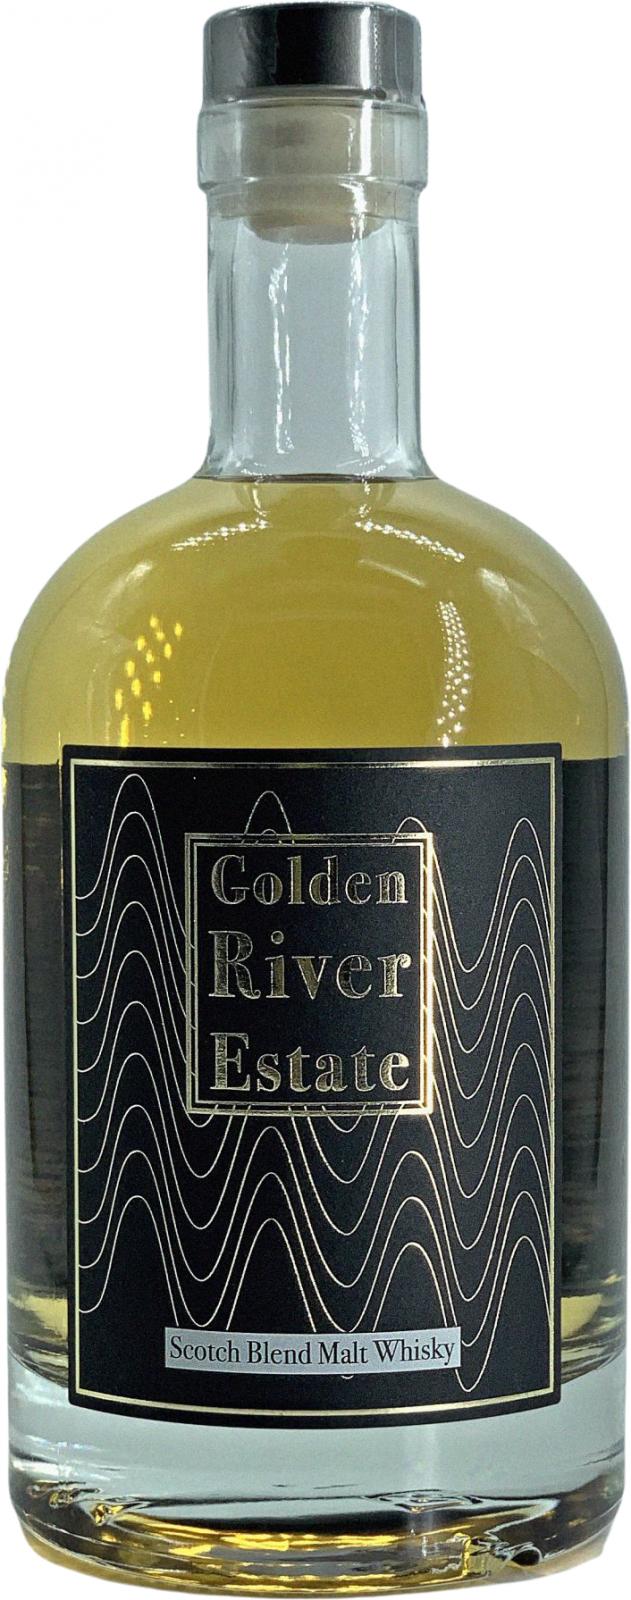 Golden River Estate Scotch Blend Malt Whisky